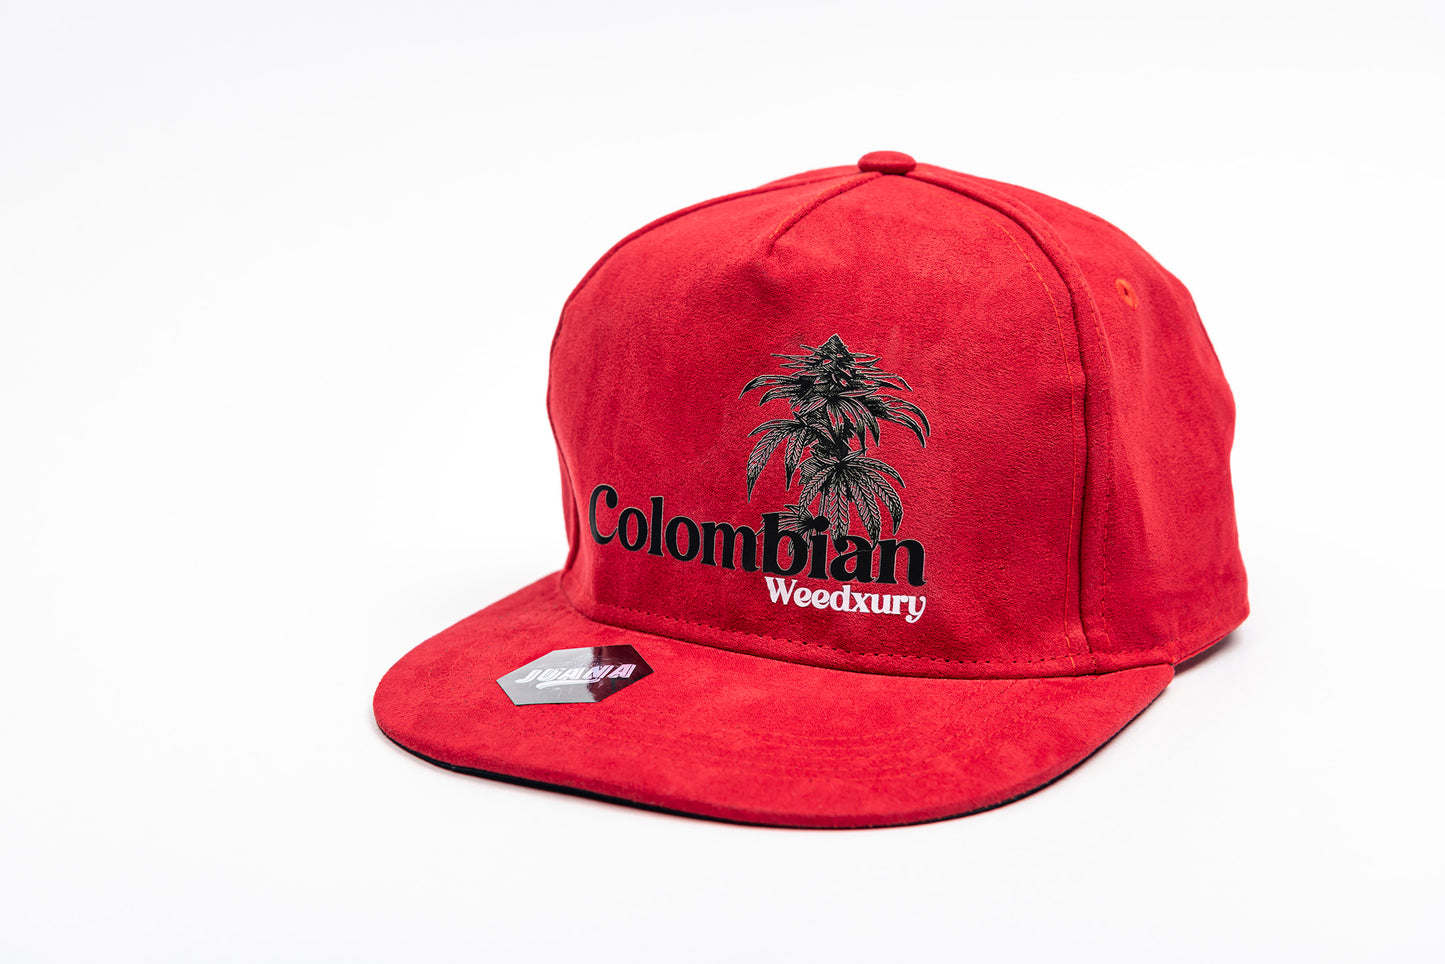 Colombian Weedxury Red Snapback Cap (Unisex)